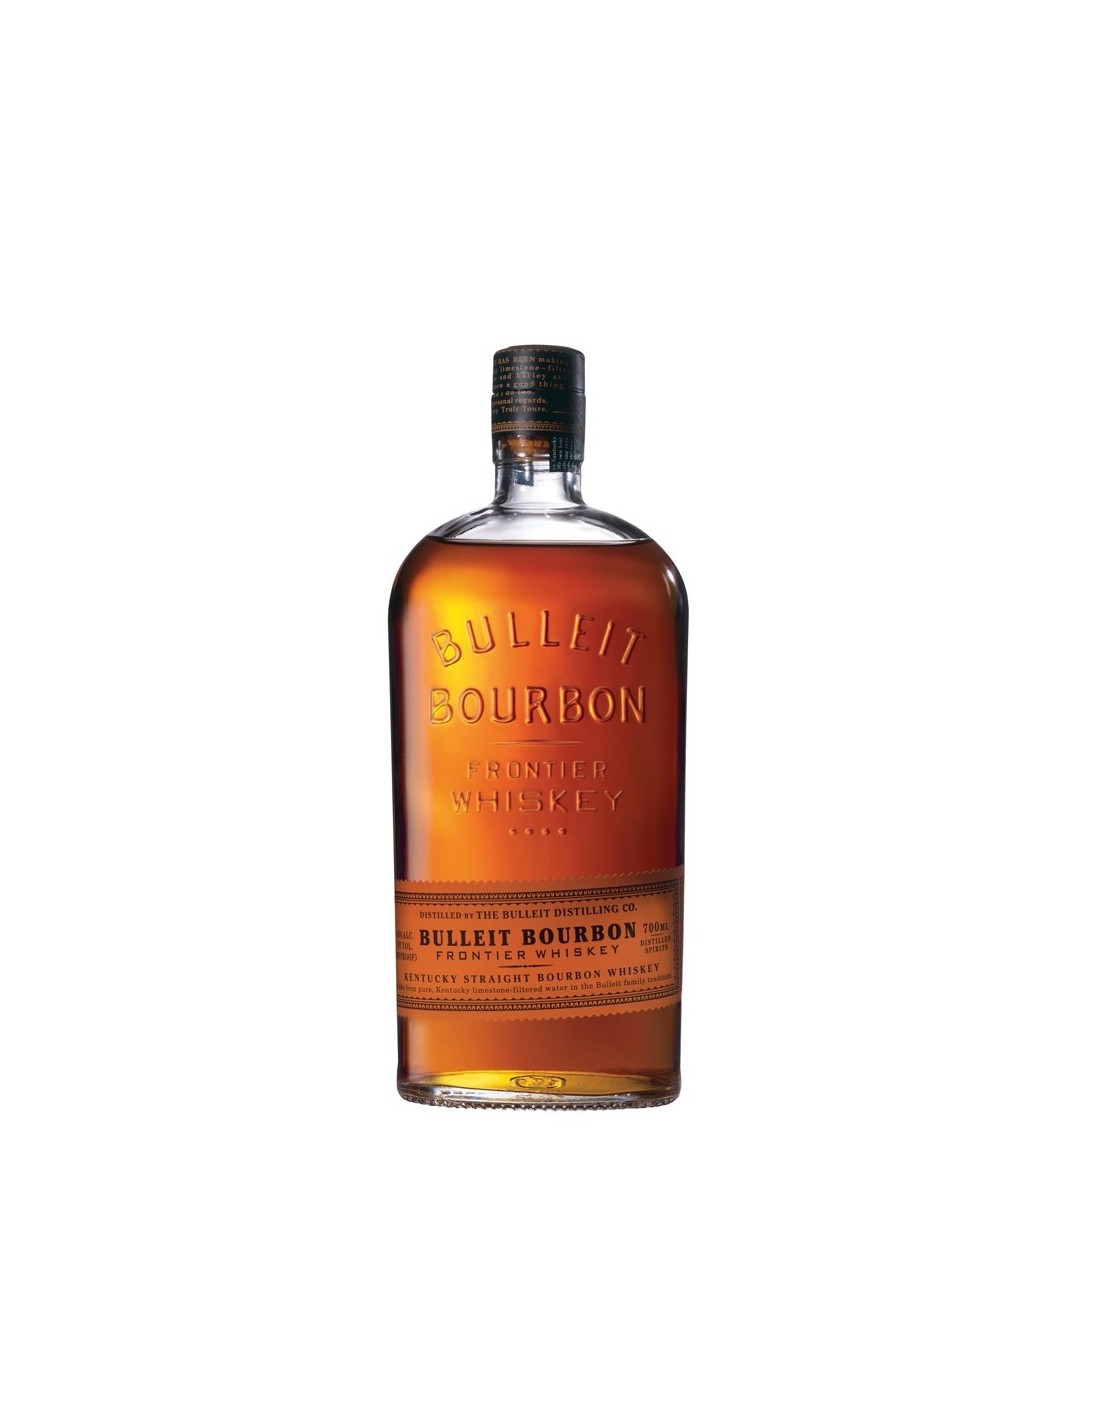 Whisky Bourbon Bulleit Frontier, 45.6% alc., 0.7L, America